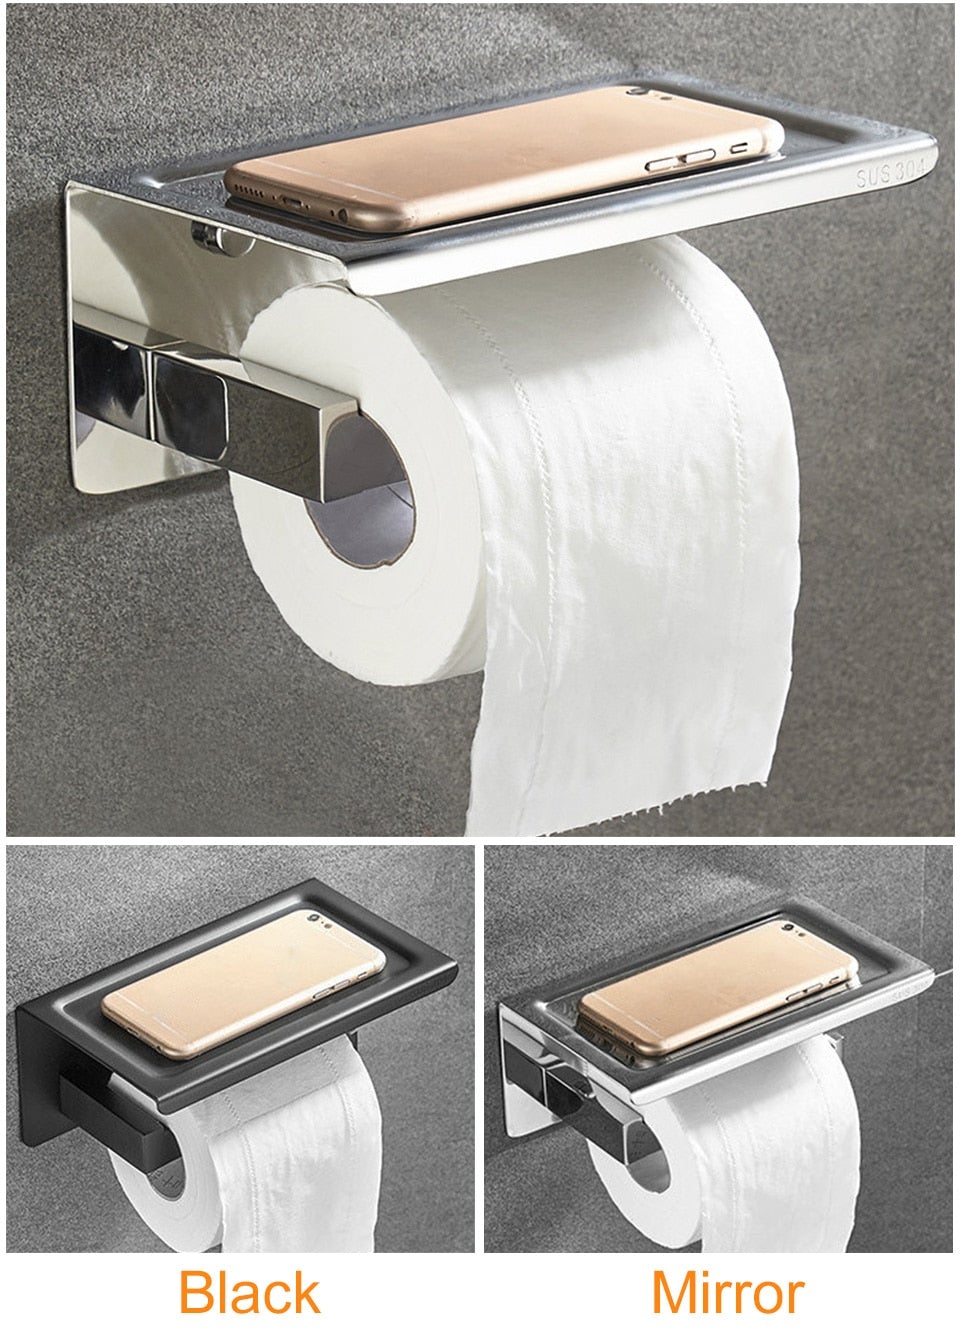 SUS 304 Stainless Steel Toilet Paper Holder with Phone Shelf Bathroom  Tissue Holder Toilet Paper Roll Holder